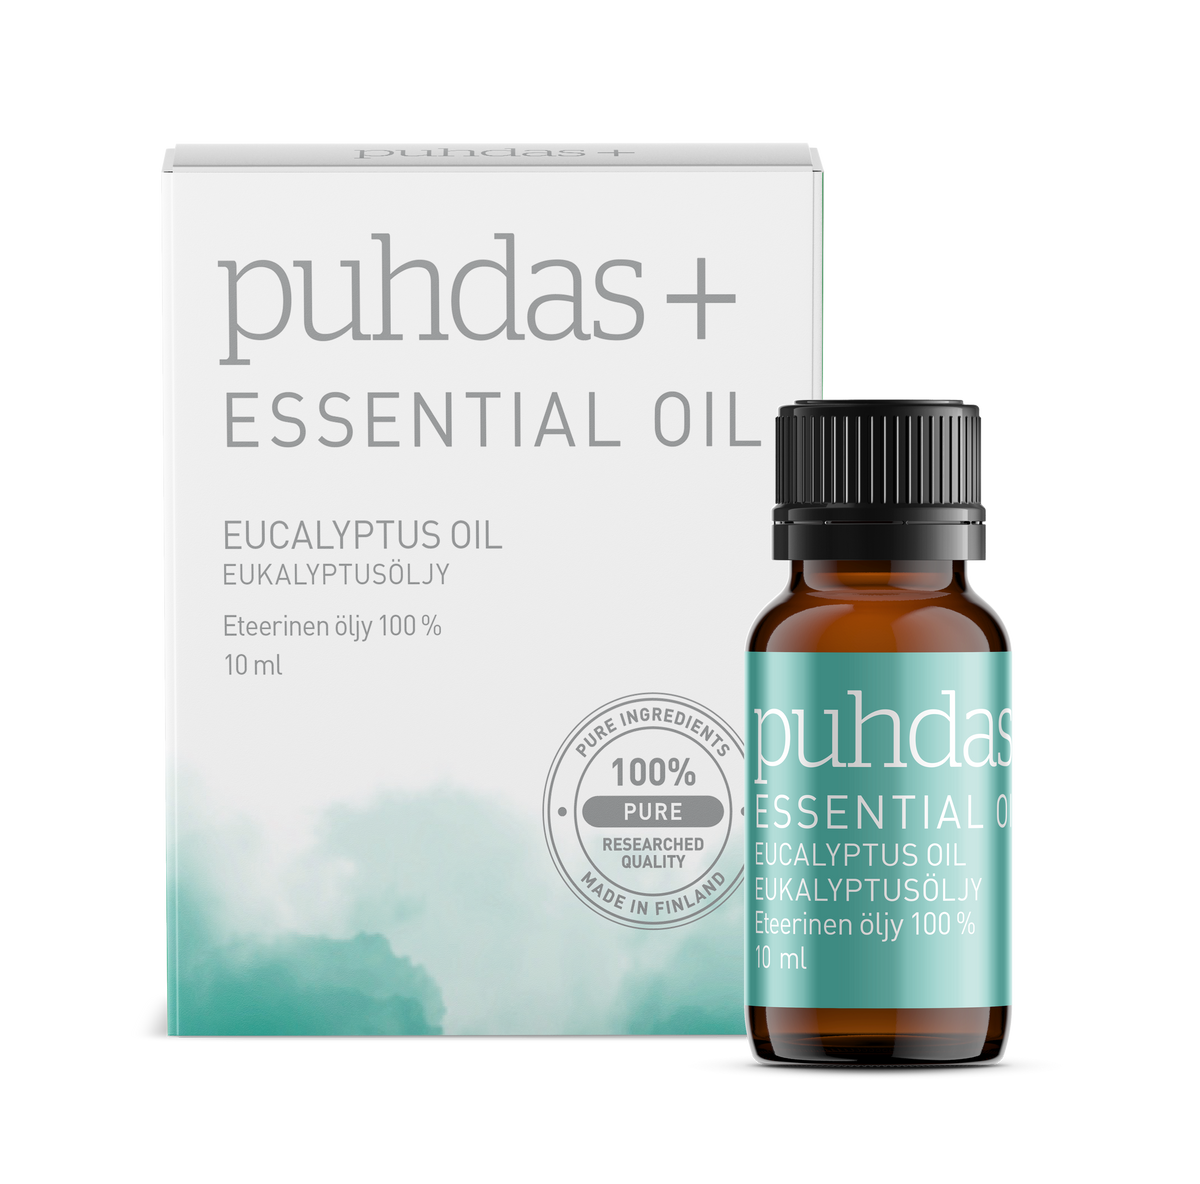 Puhdas+ Essential Oil Eucalyptus Oil 10 ml - Eukalyptusöljy